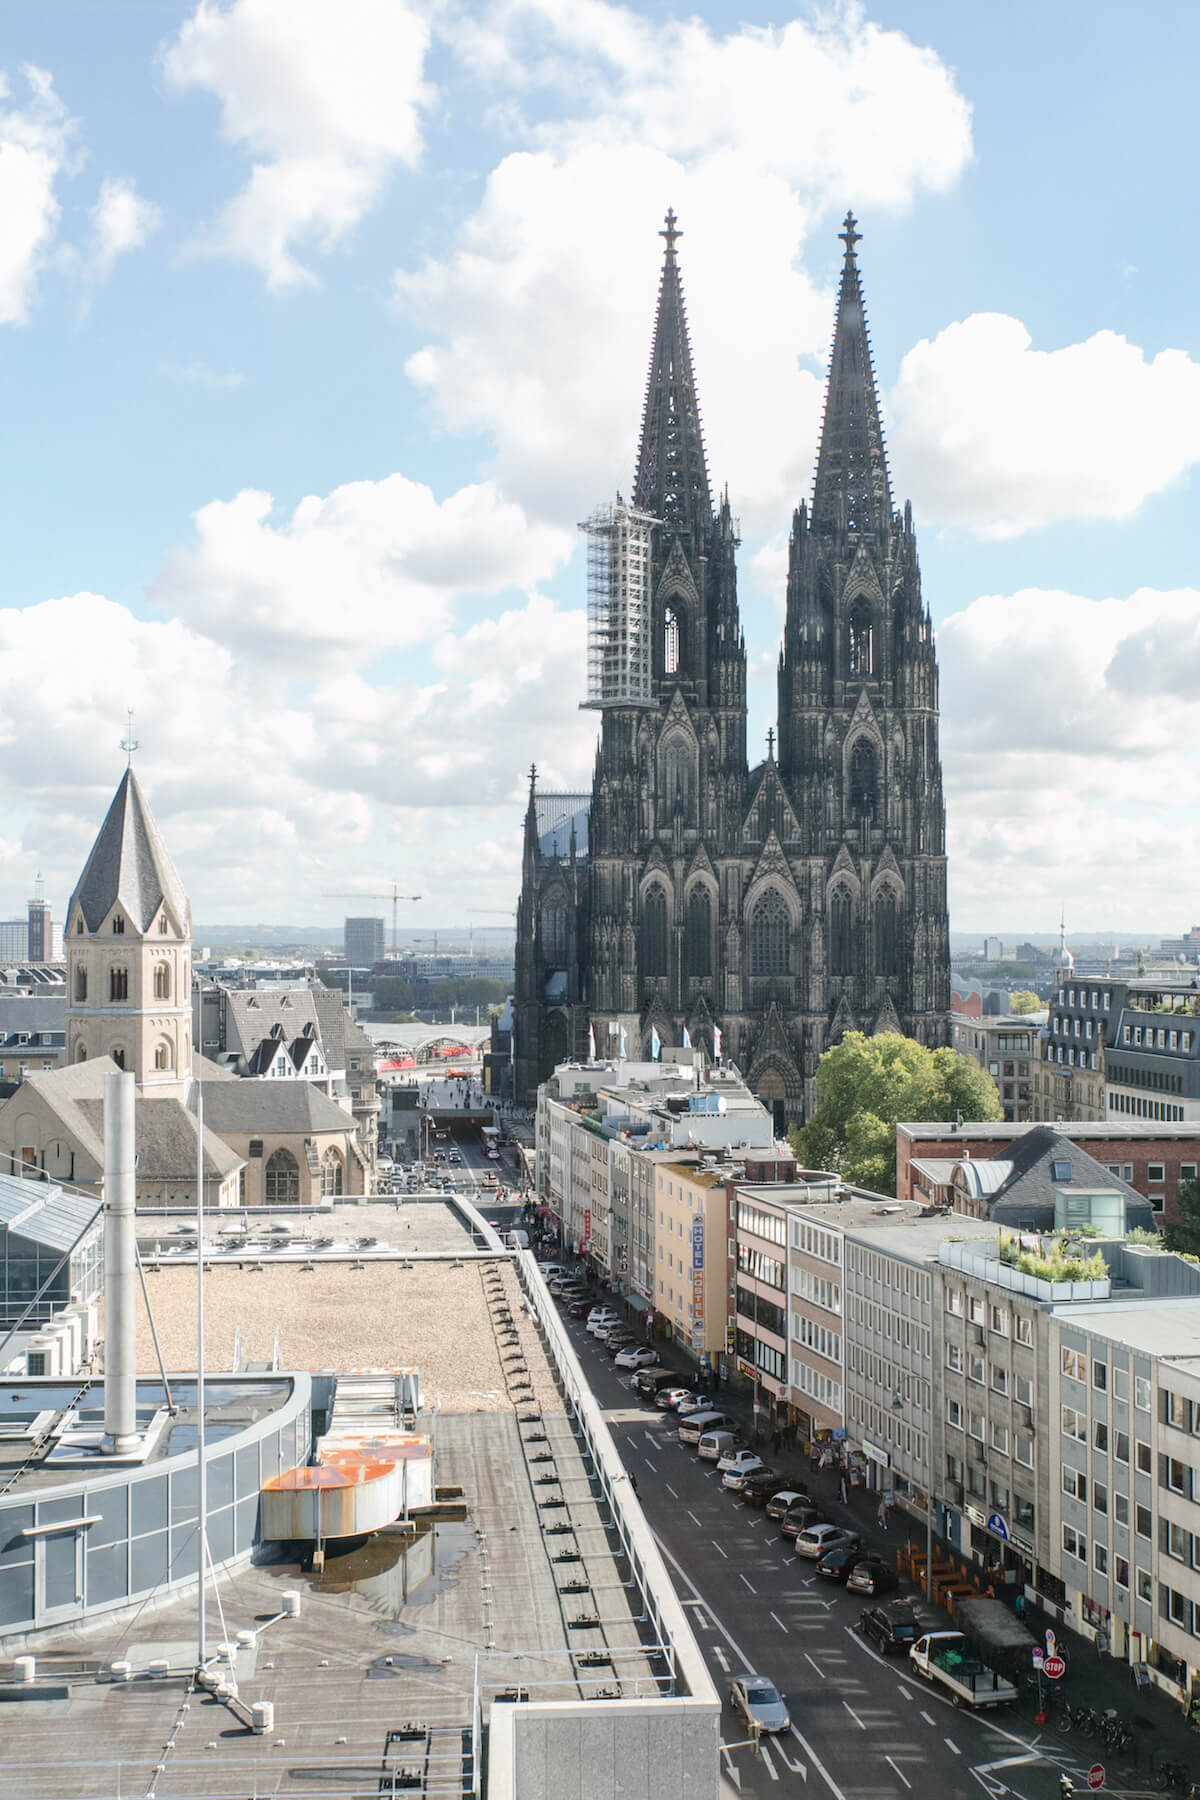 Blogst Konferenz 2018 in Köln